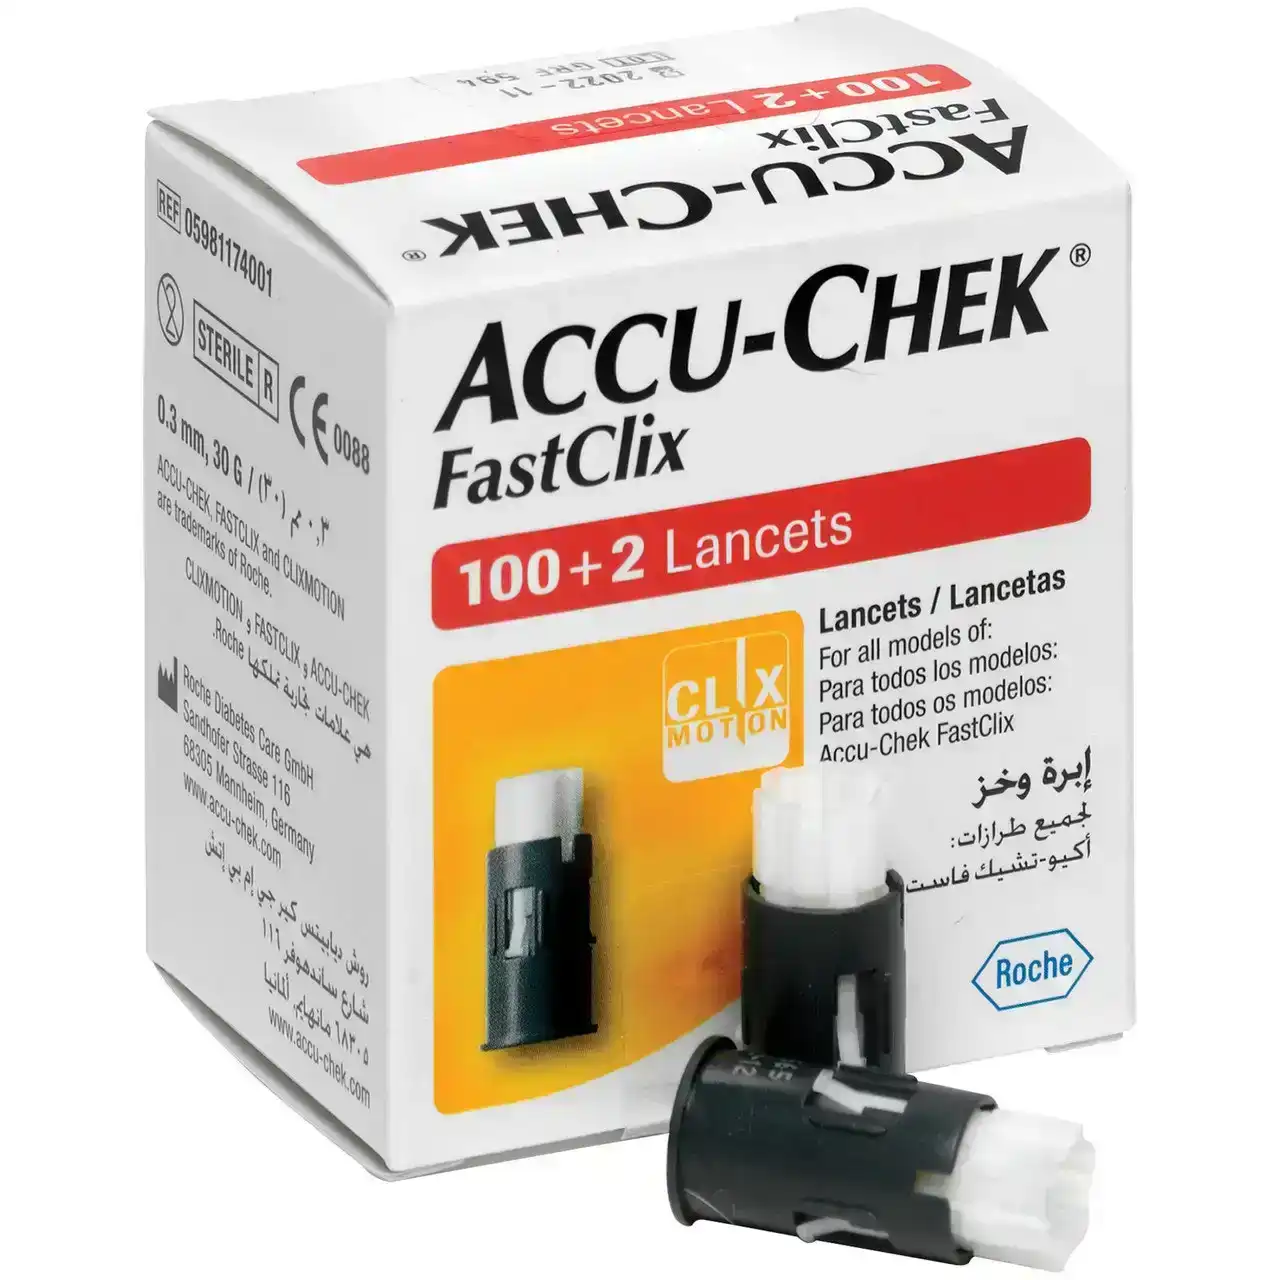 Accuchek Fastclix 100 + 2 Lancets